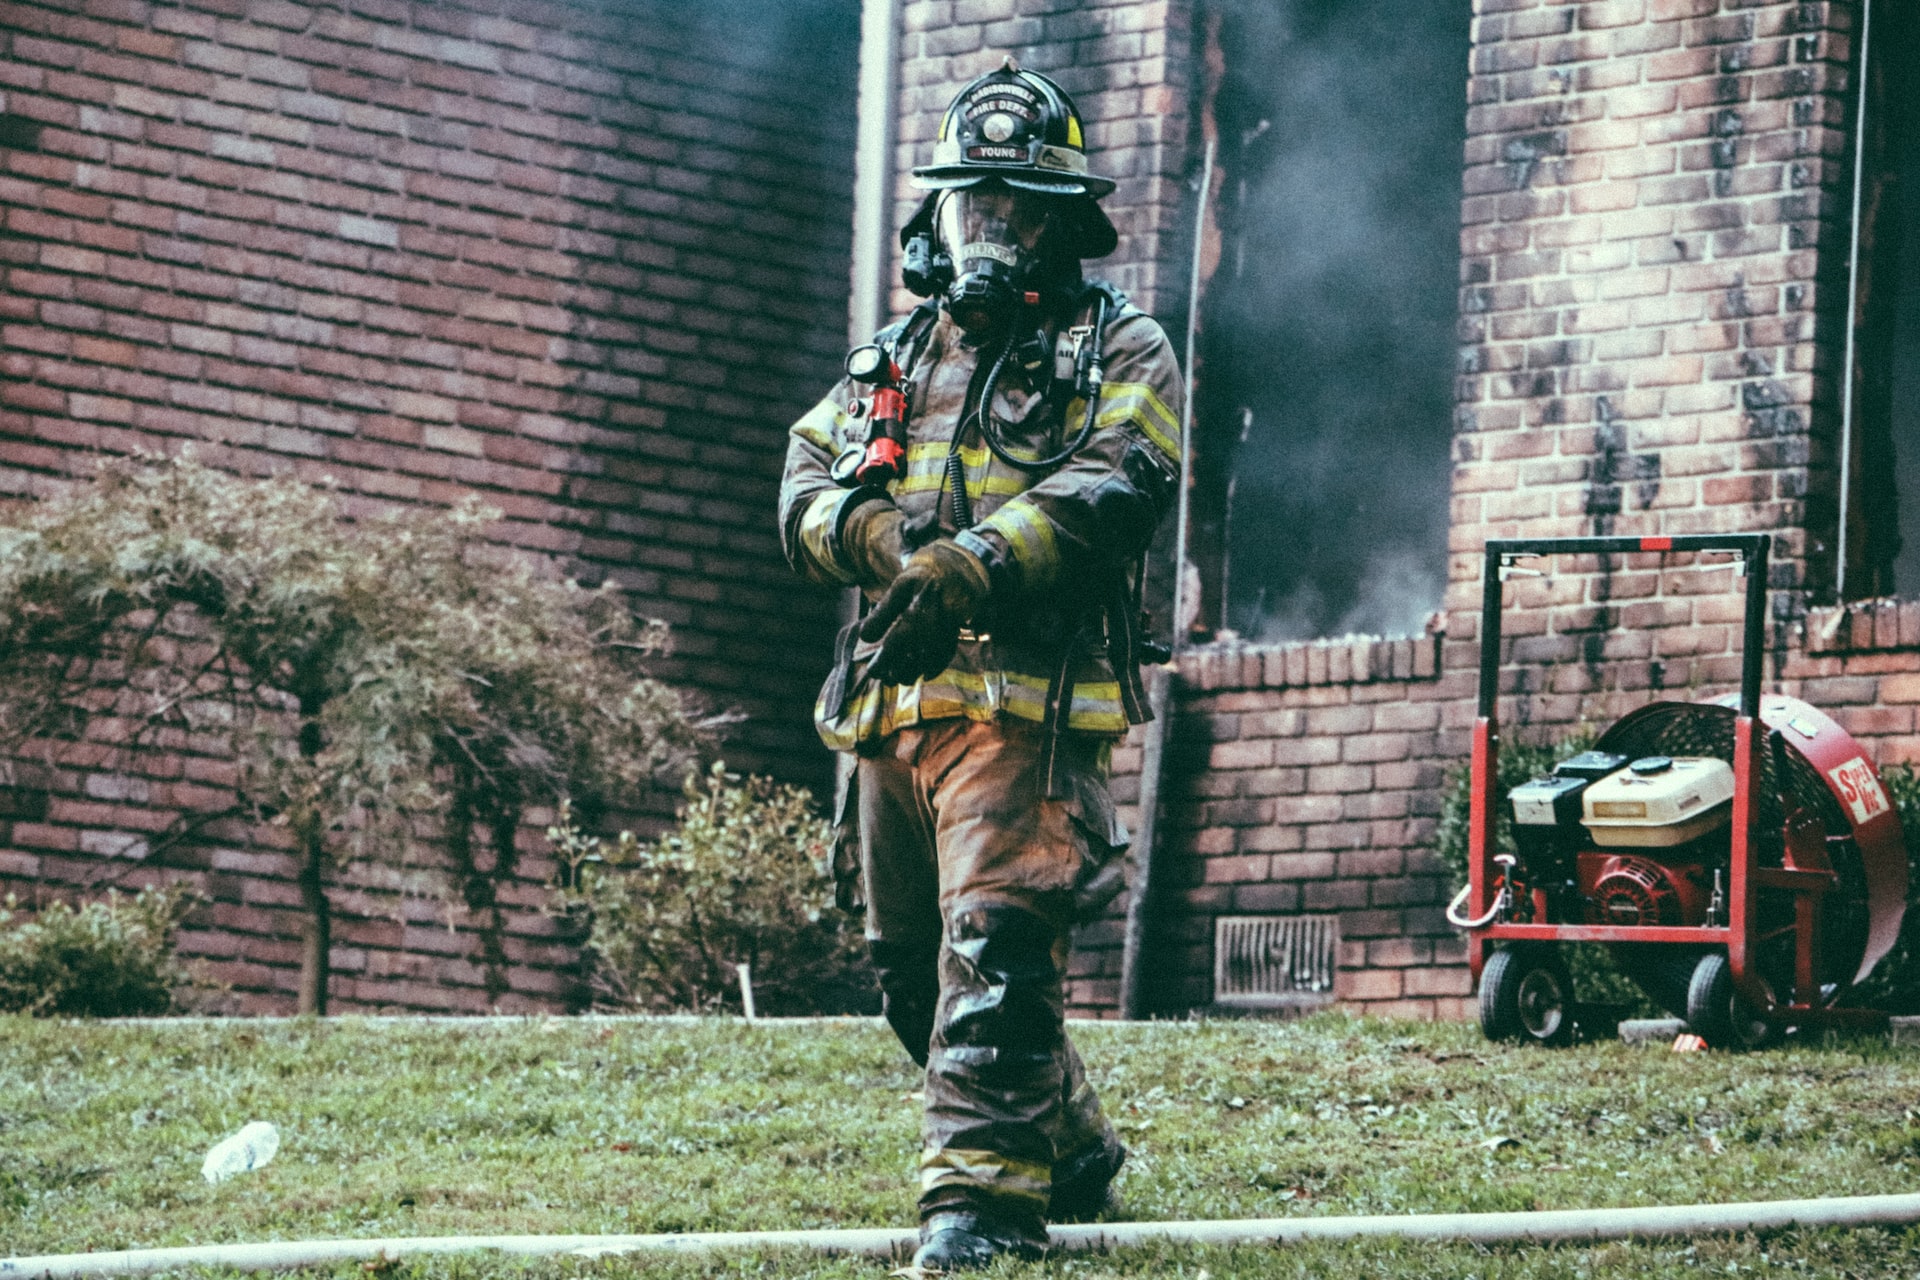 Fireman wearing uniform